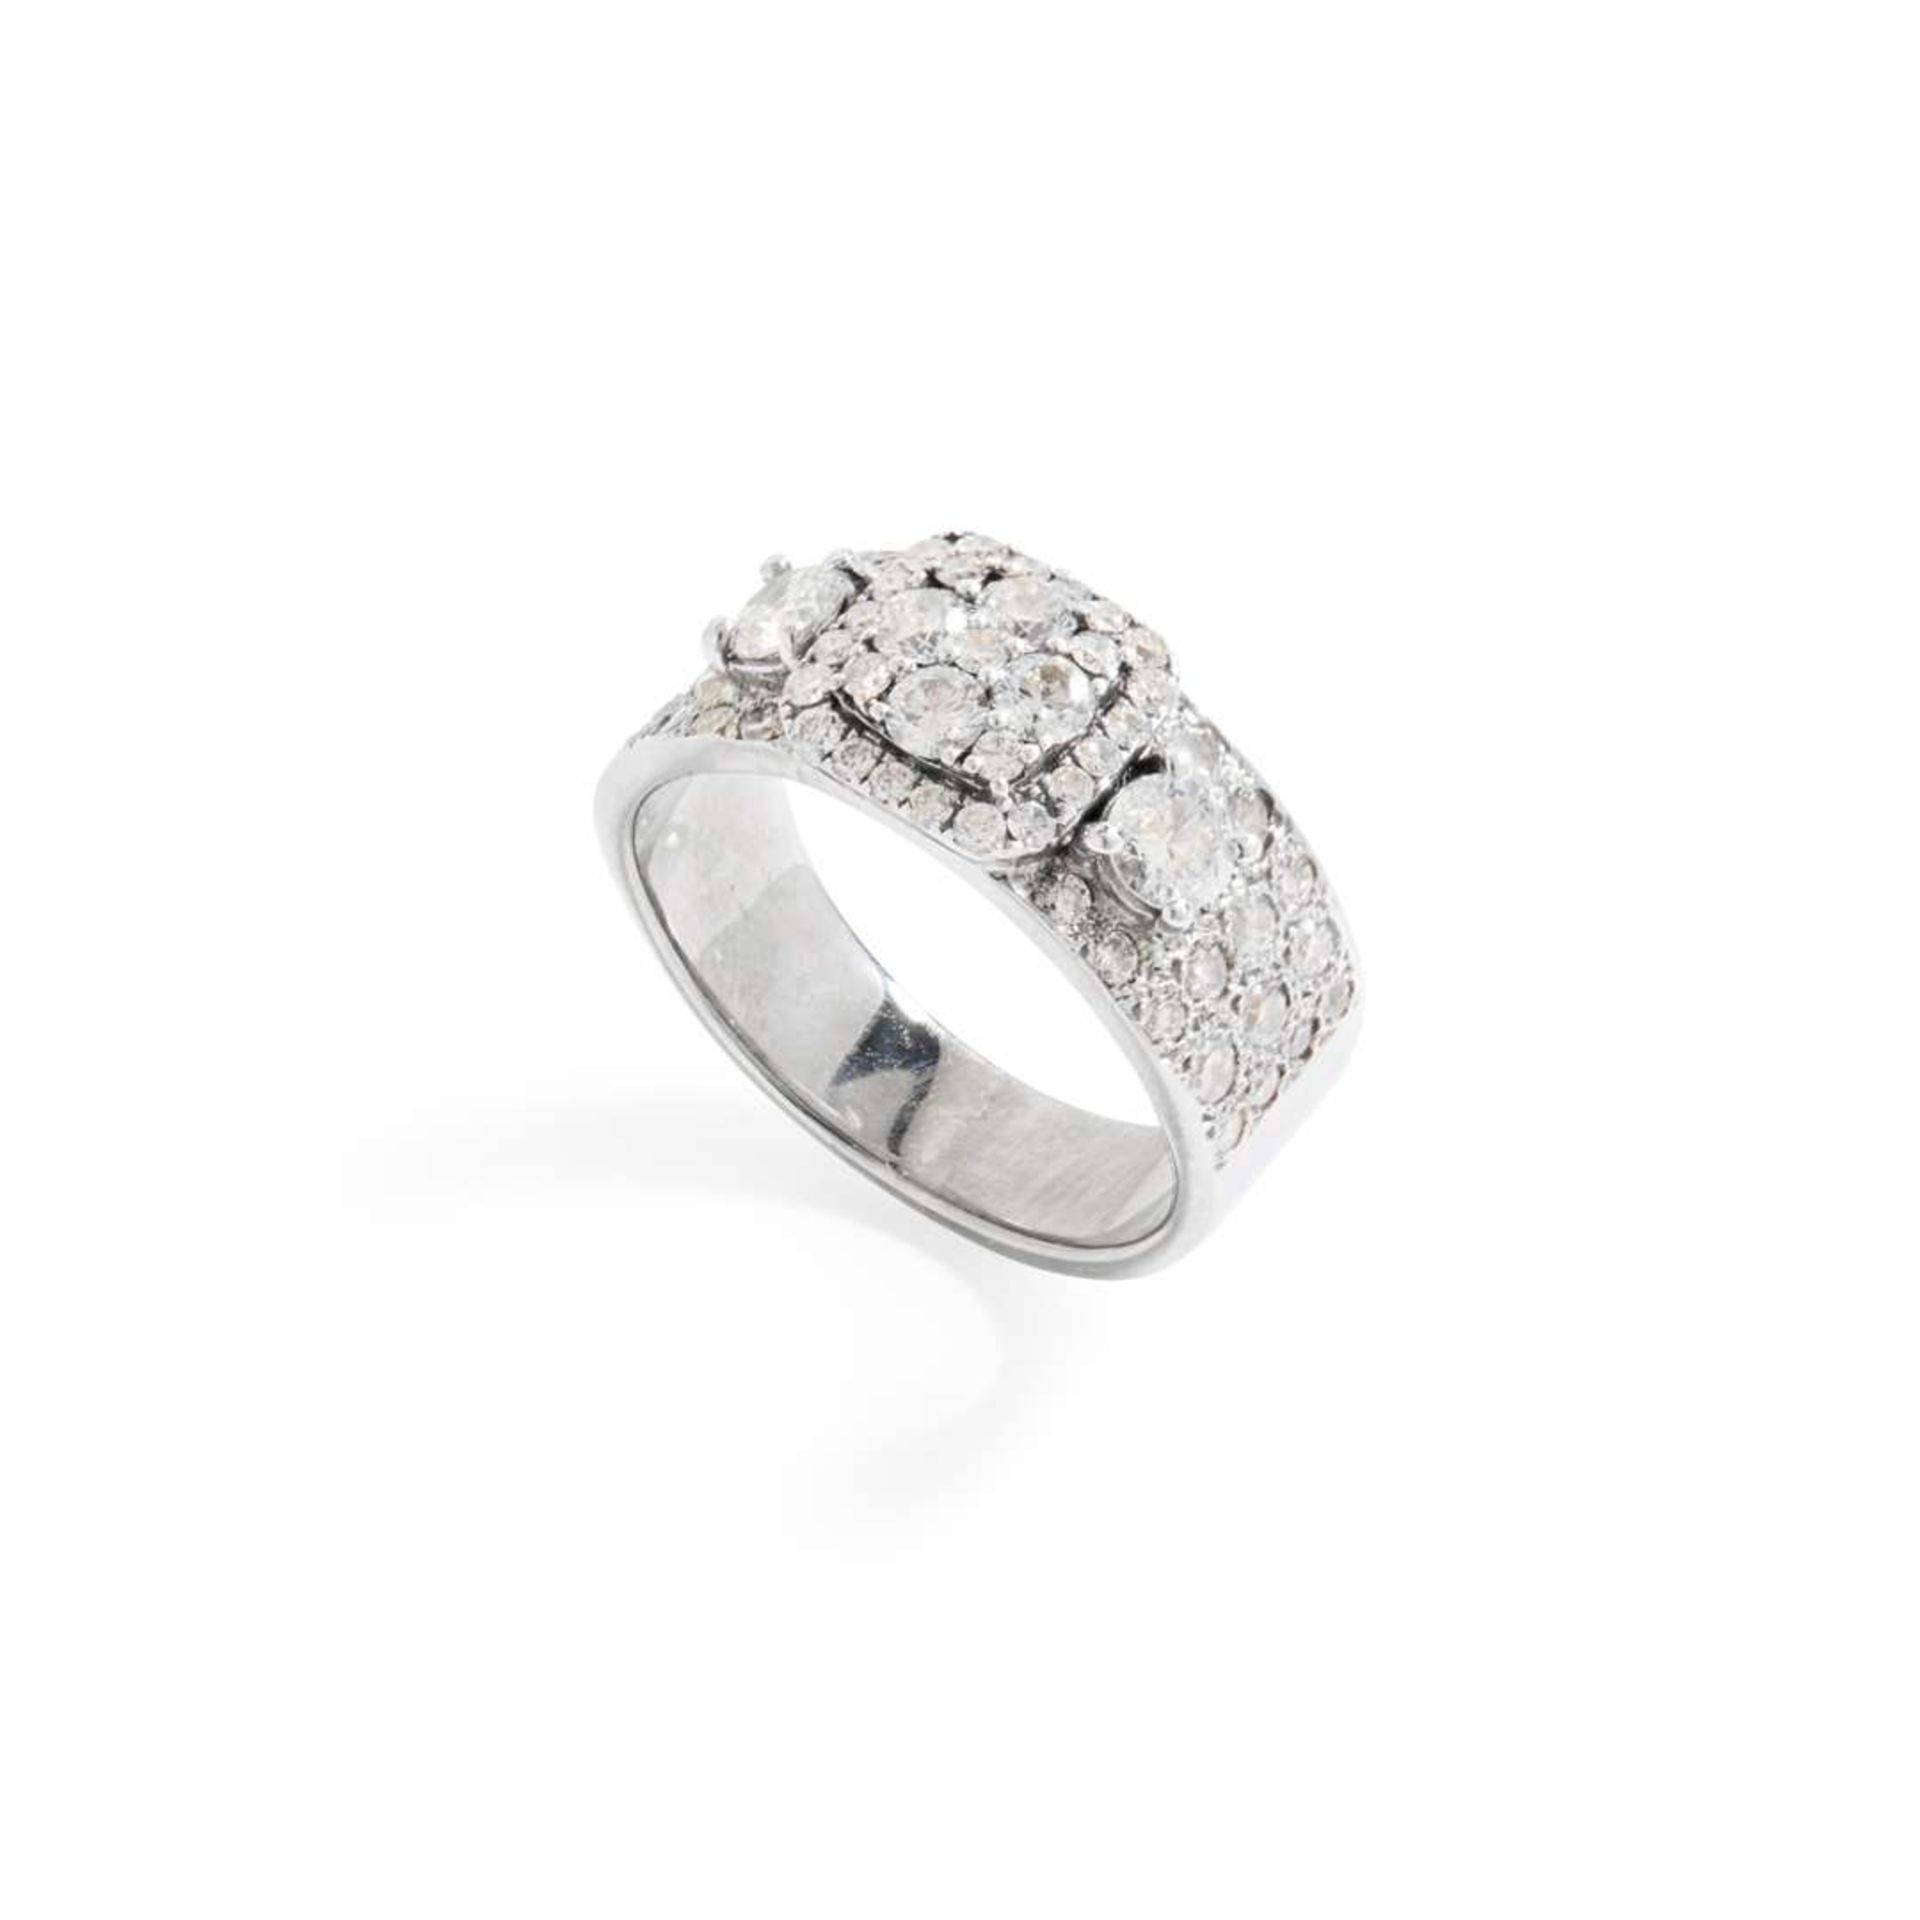 A contemporary diamond ring